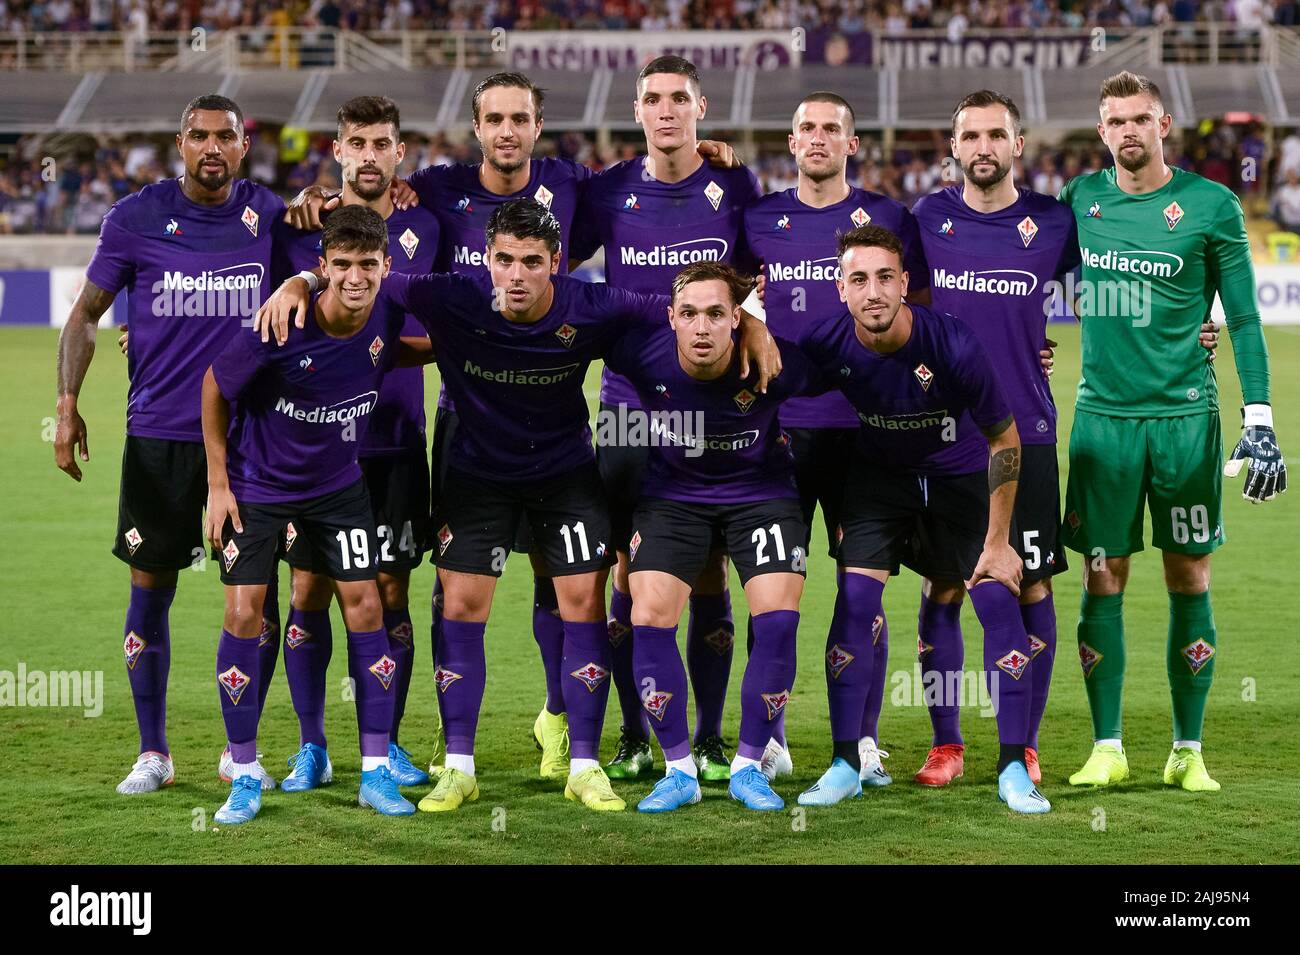 Category:ACF Fiorentina players, Football Wiki